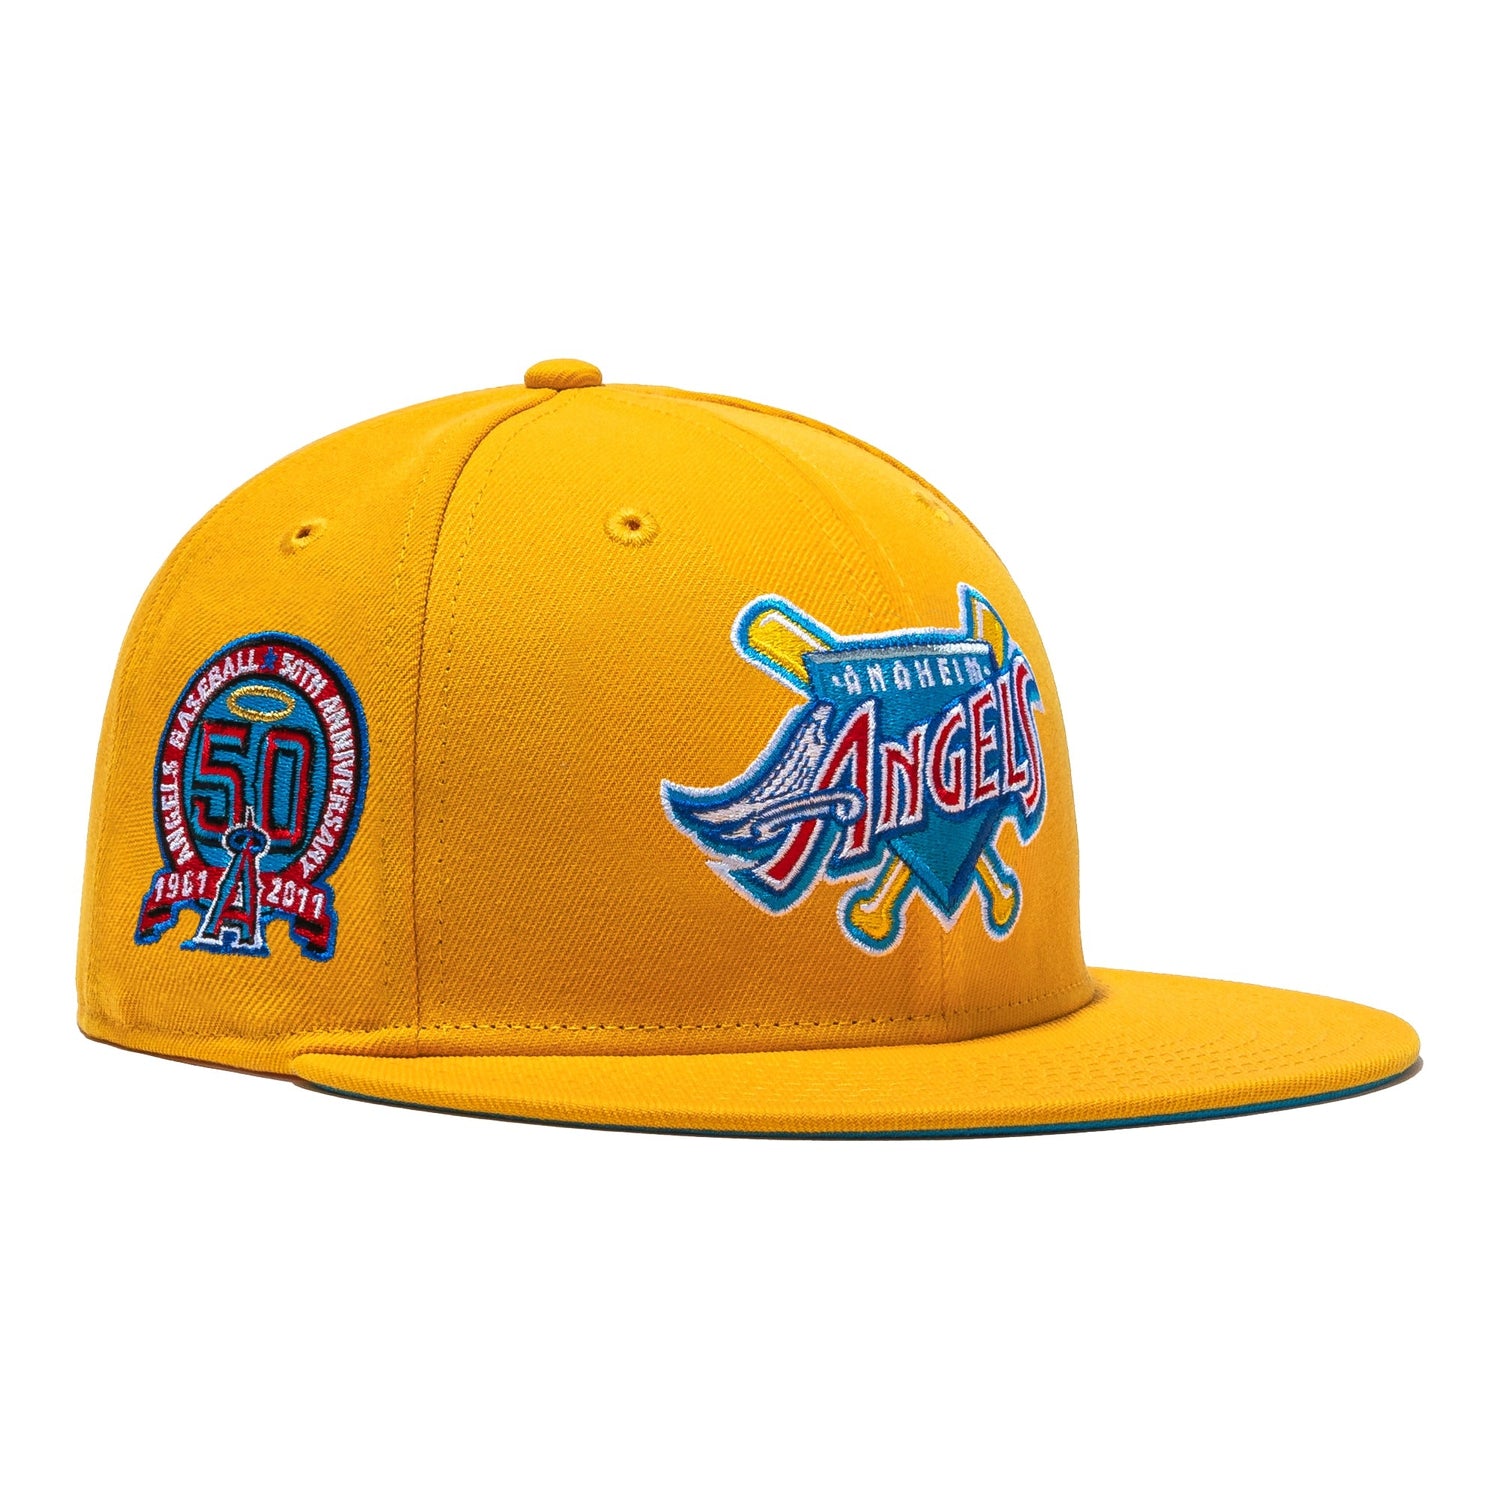 New Era 9FIFTY Los Angeles Lakers Retro Wheel Snapback Hat Yellow Black White